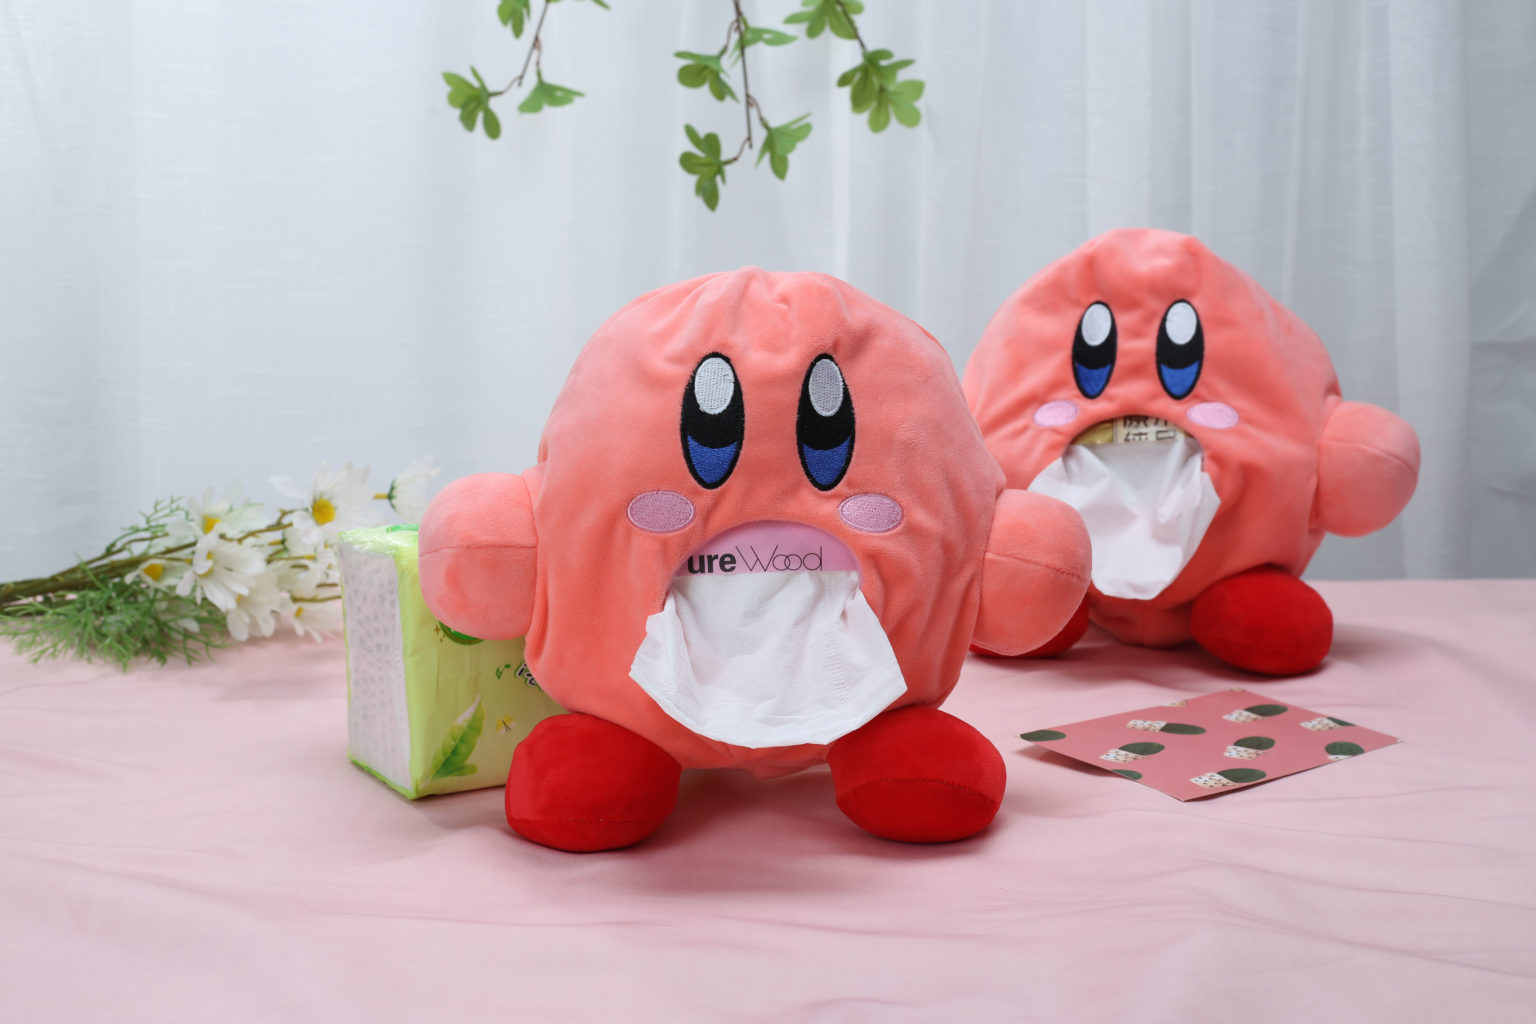 https://regisbox.com/wp-content/uploads/2022/04/Kirby-Tissue-Holder-Cute-Kirby-Tissue-Plush-Cover-Kawaii-Tissue-Box-Cover-Pink-Tissue-Case-Kirby-Plushie-6-1536x1024.jpg